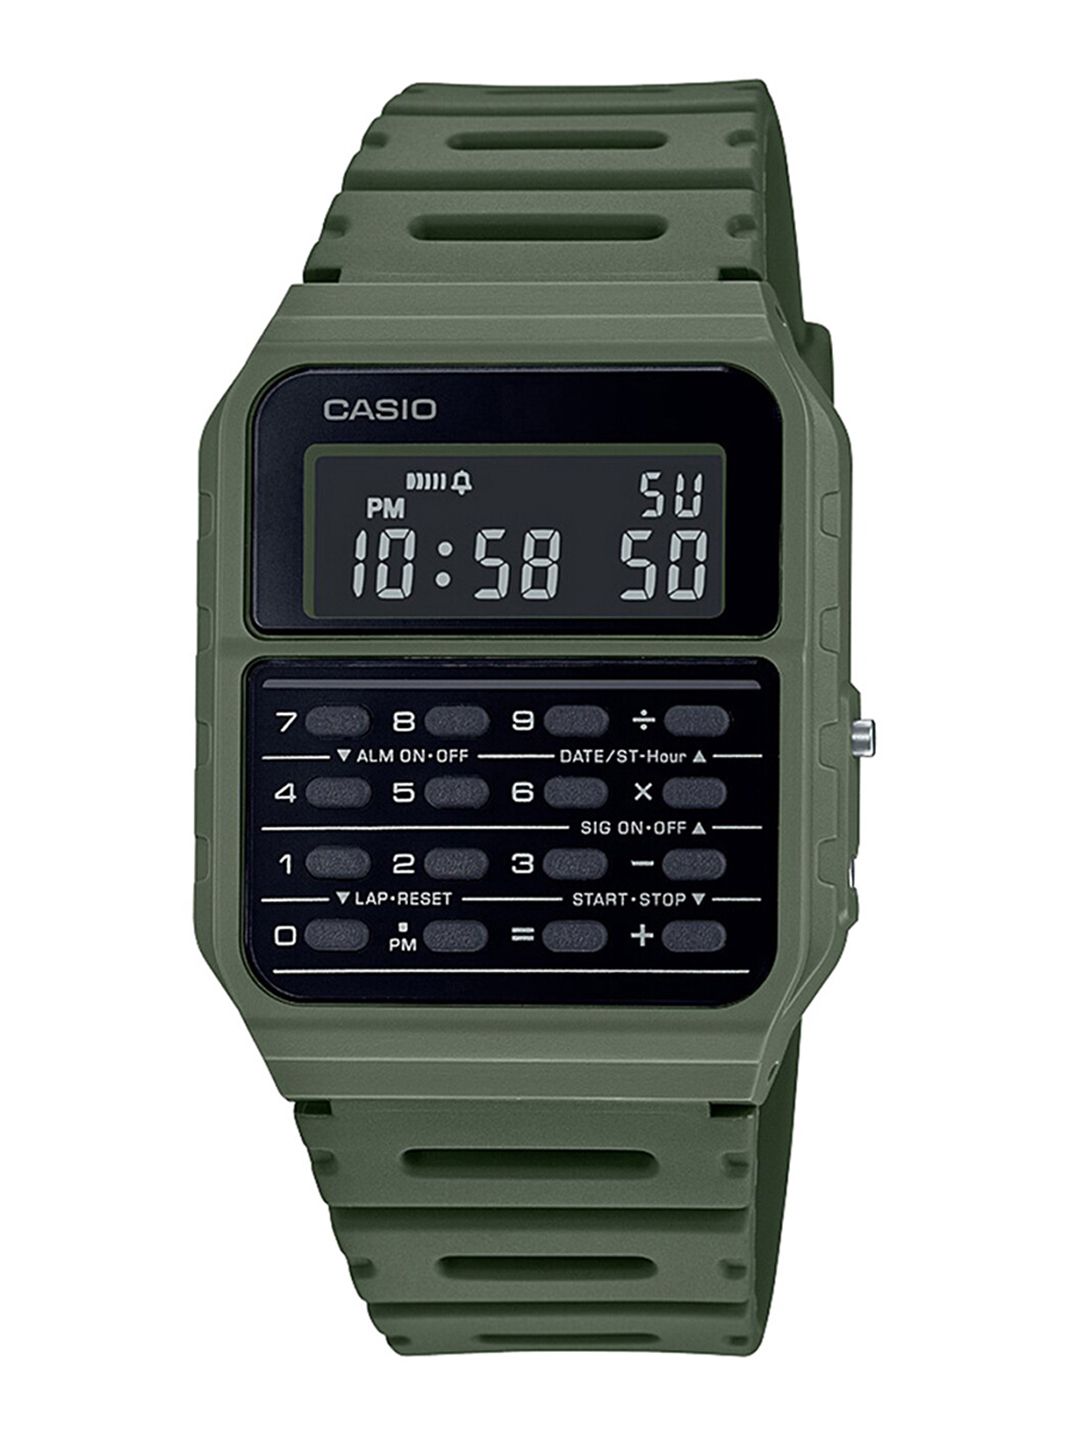 CASIO Unisex Black & Green Digital Watch D210 Price in India